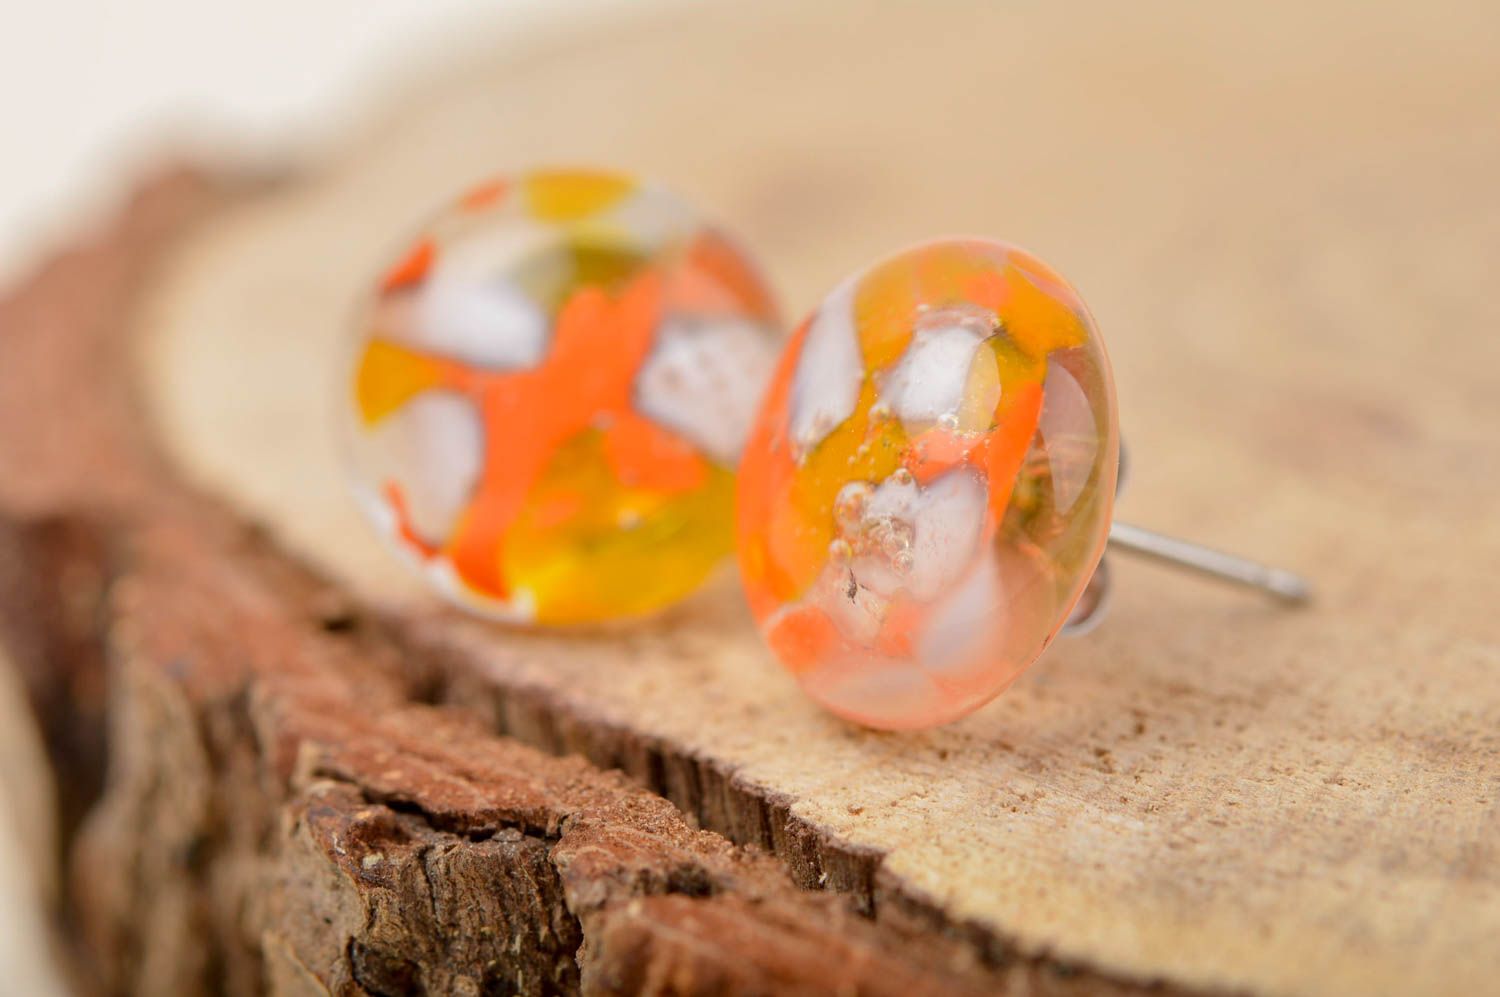 Unusual handmade glass earrings stud earrings design artisan jewelry designs photo 1